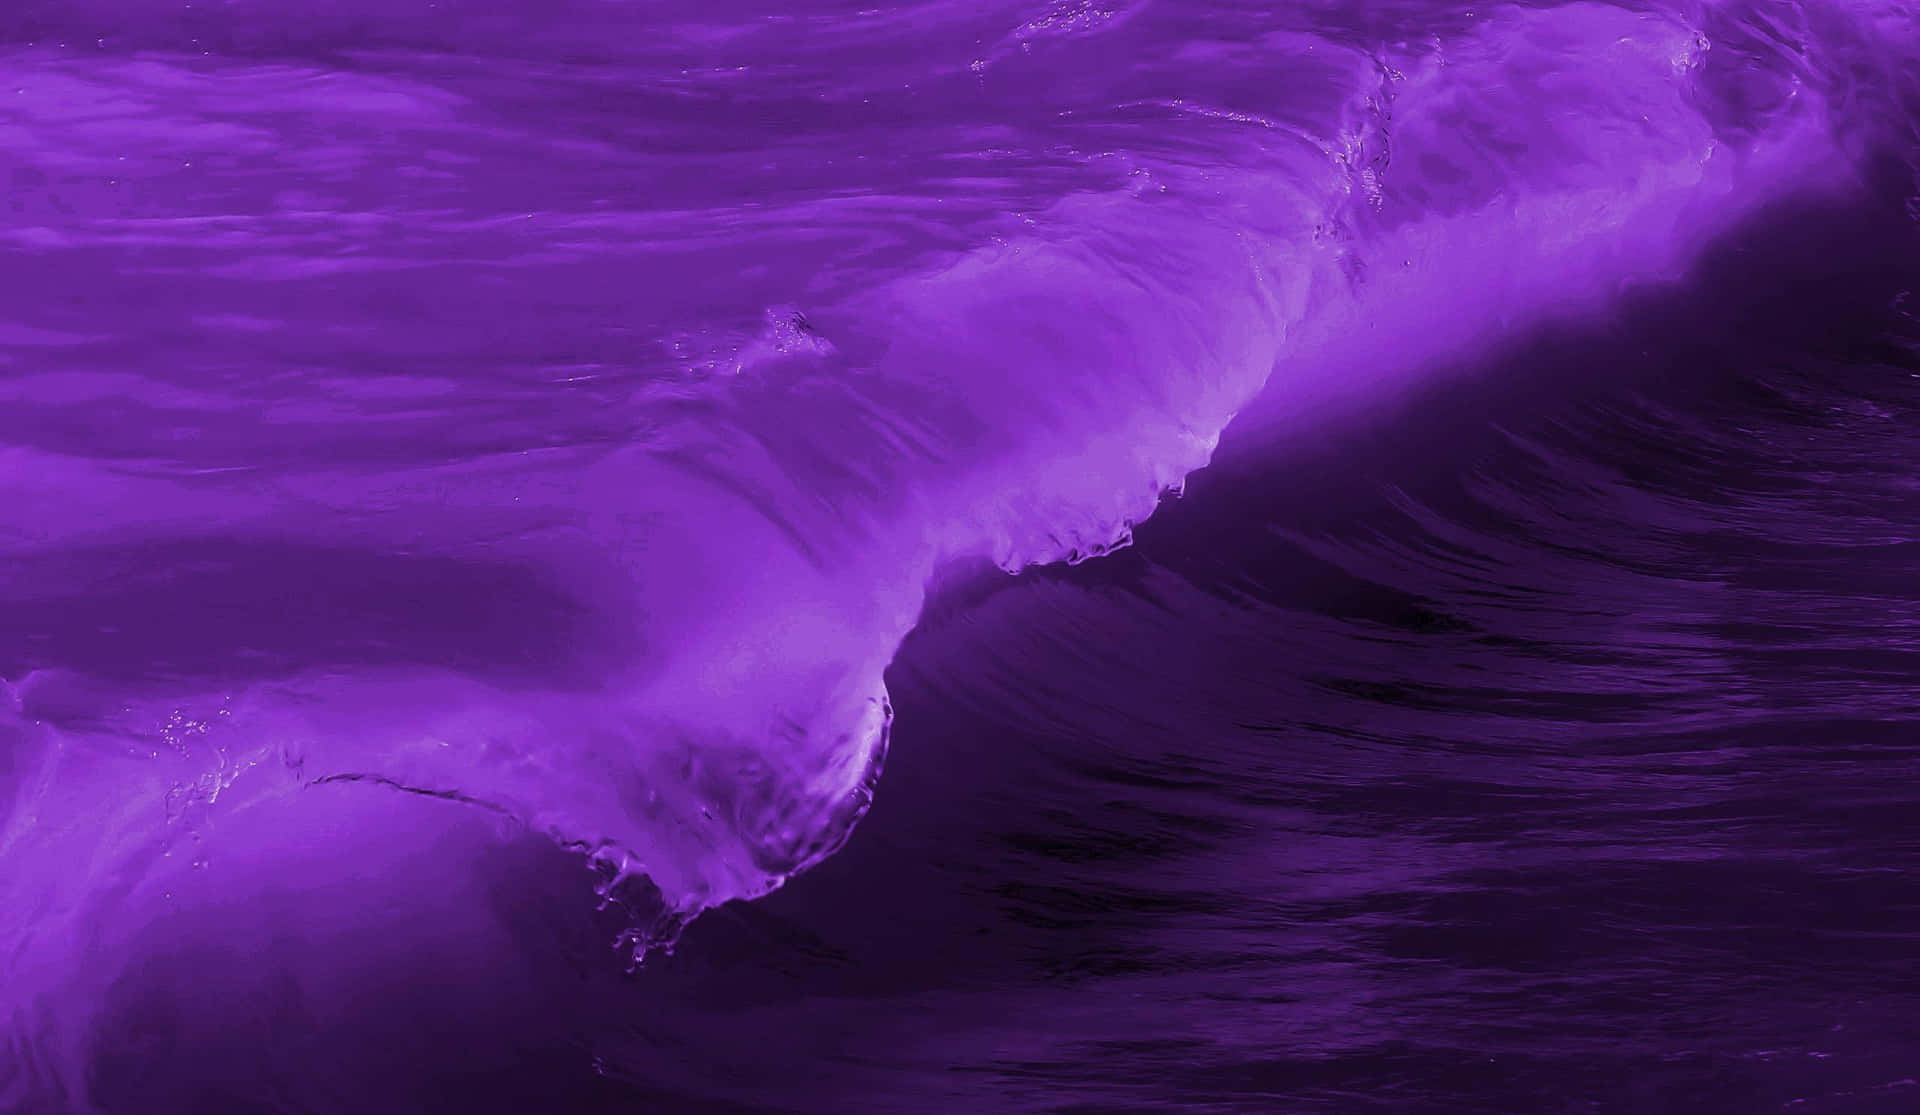 Enjoy the visual pleasure of the Purple Aesthetics Computer Wallpaper